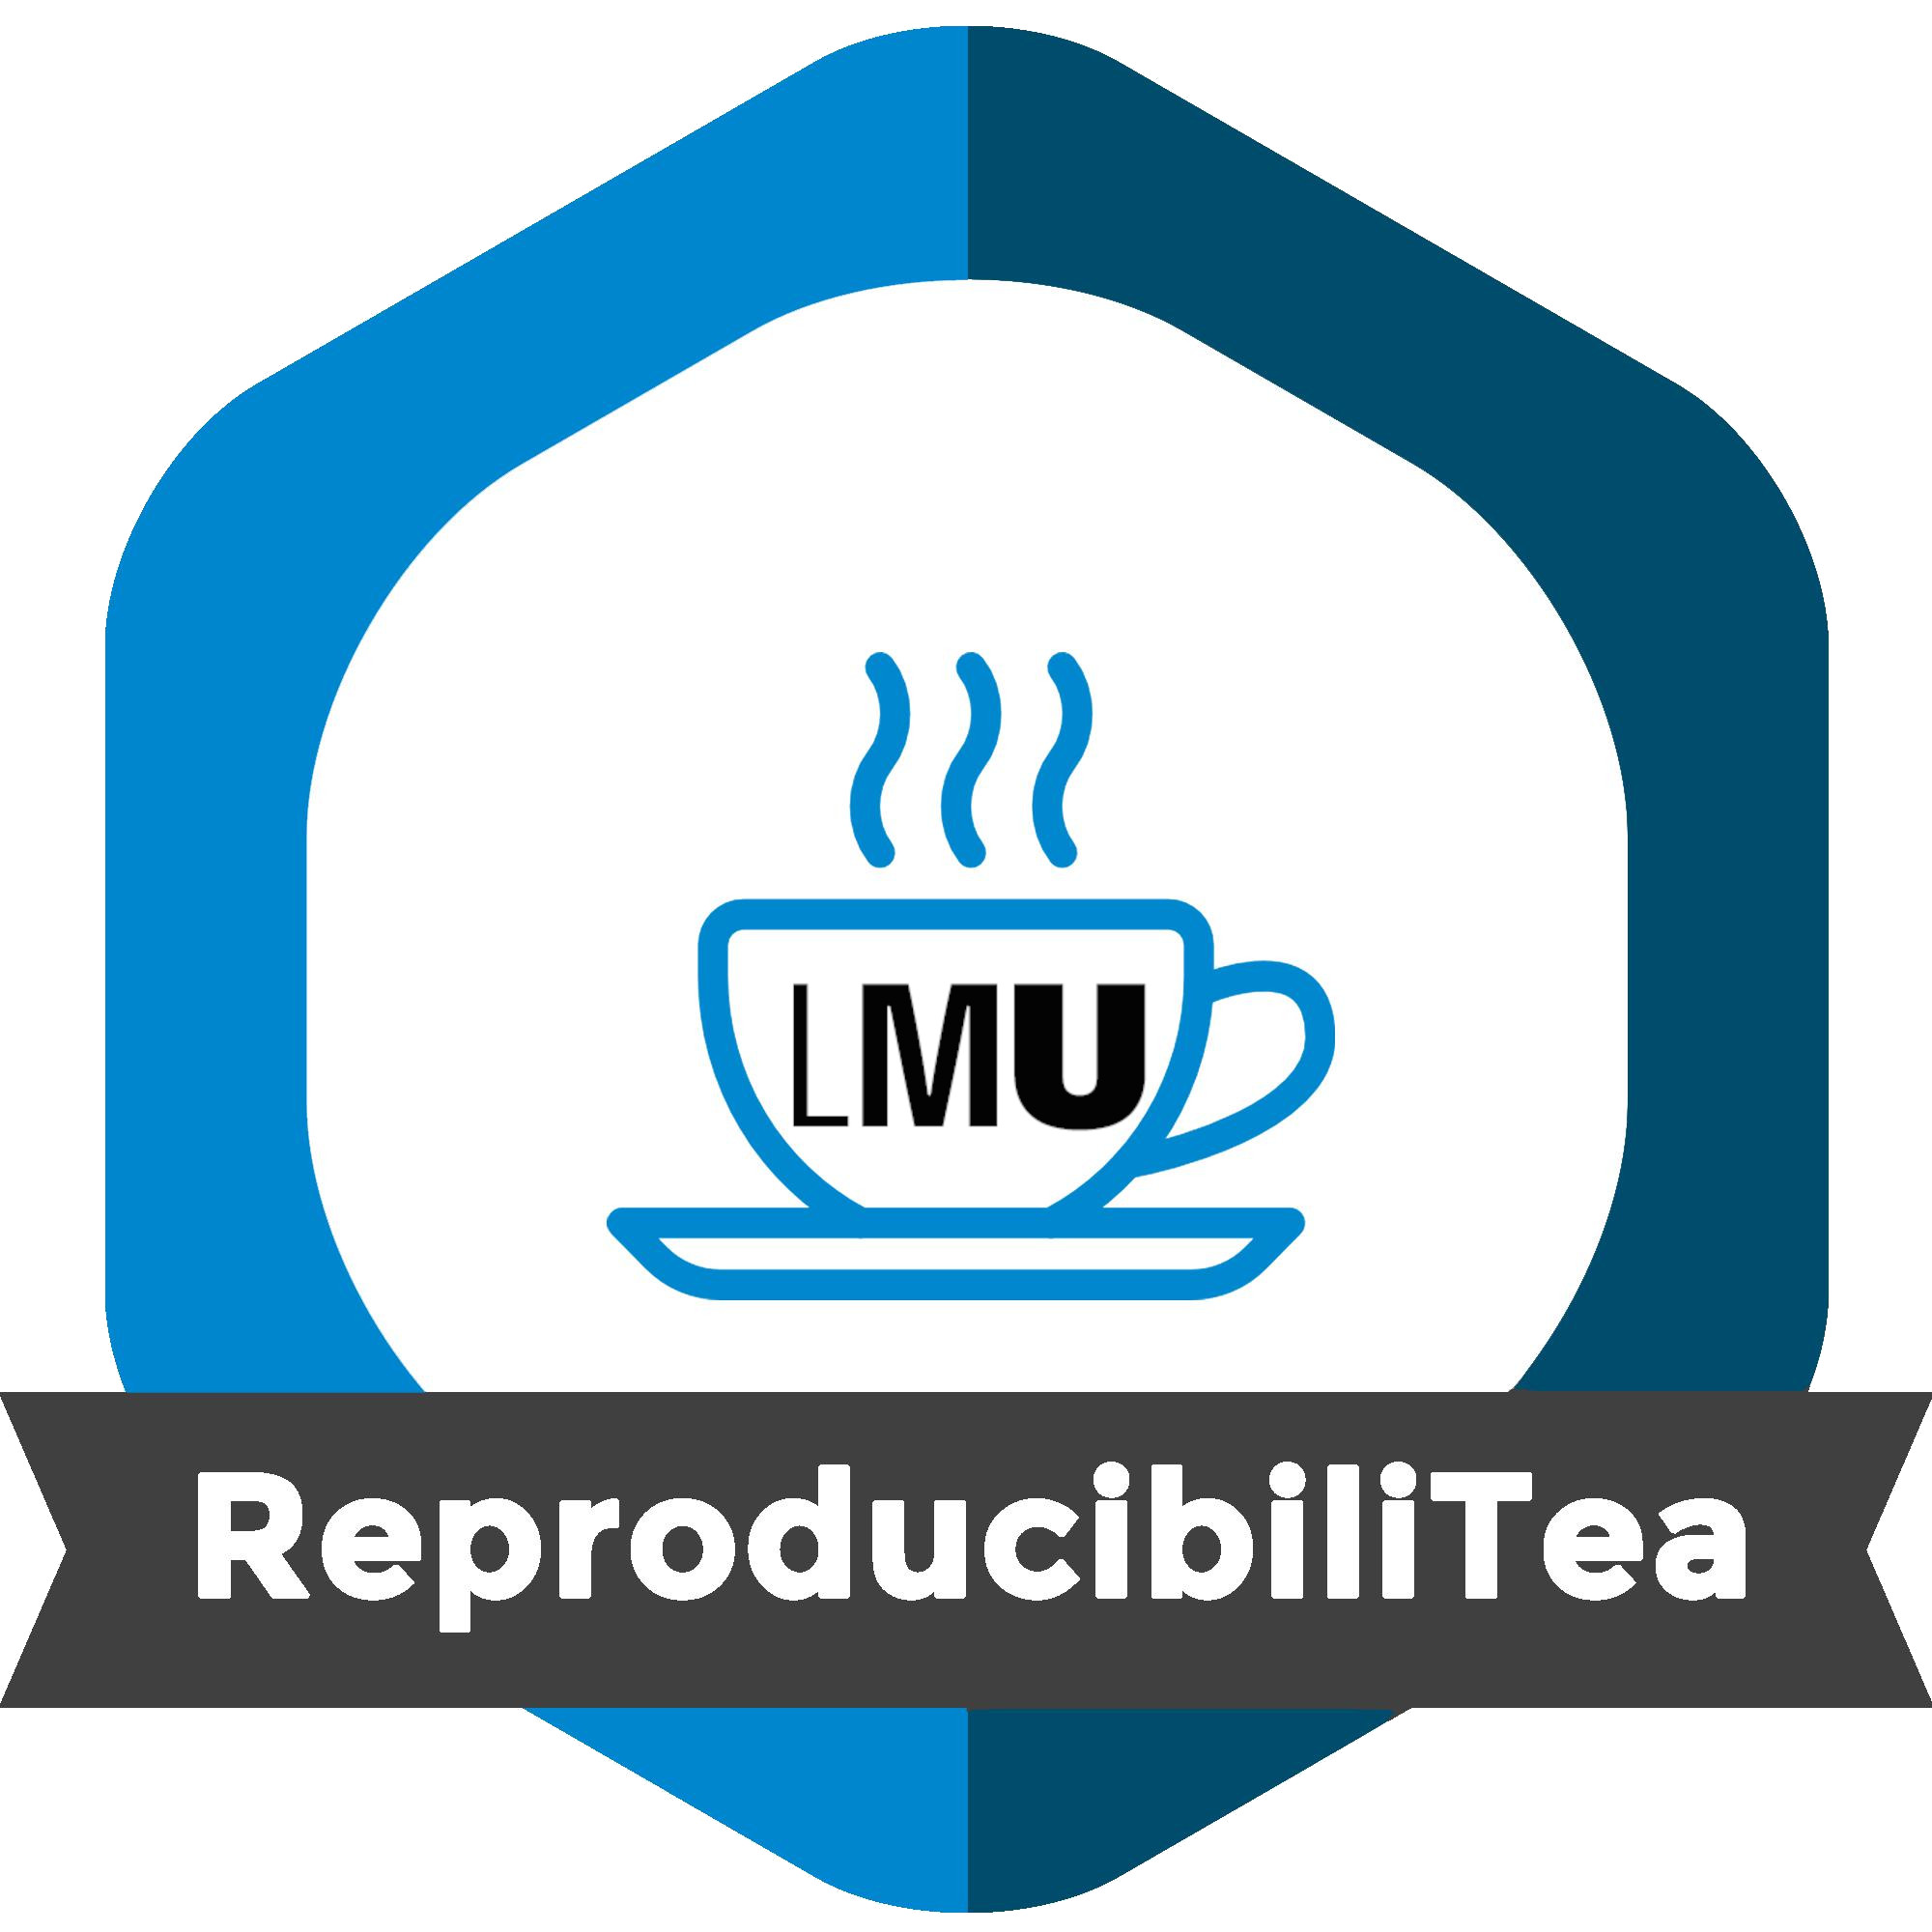 ReproducibiliTea_logo